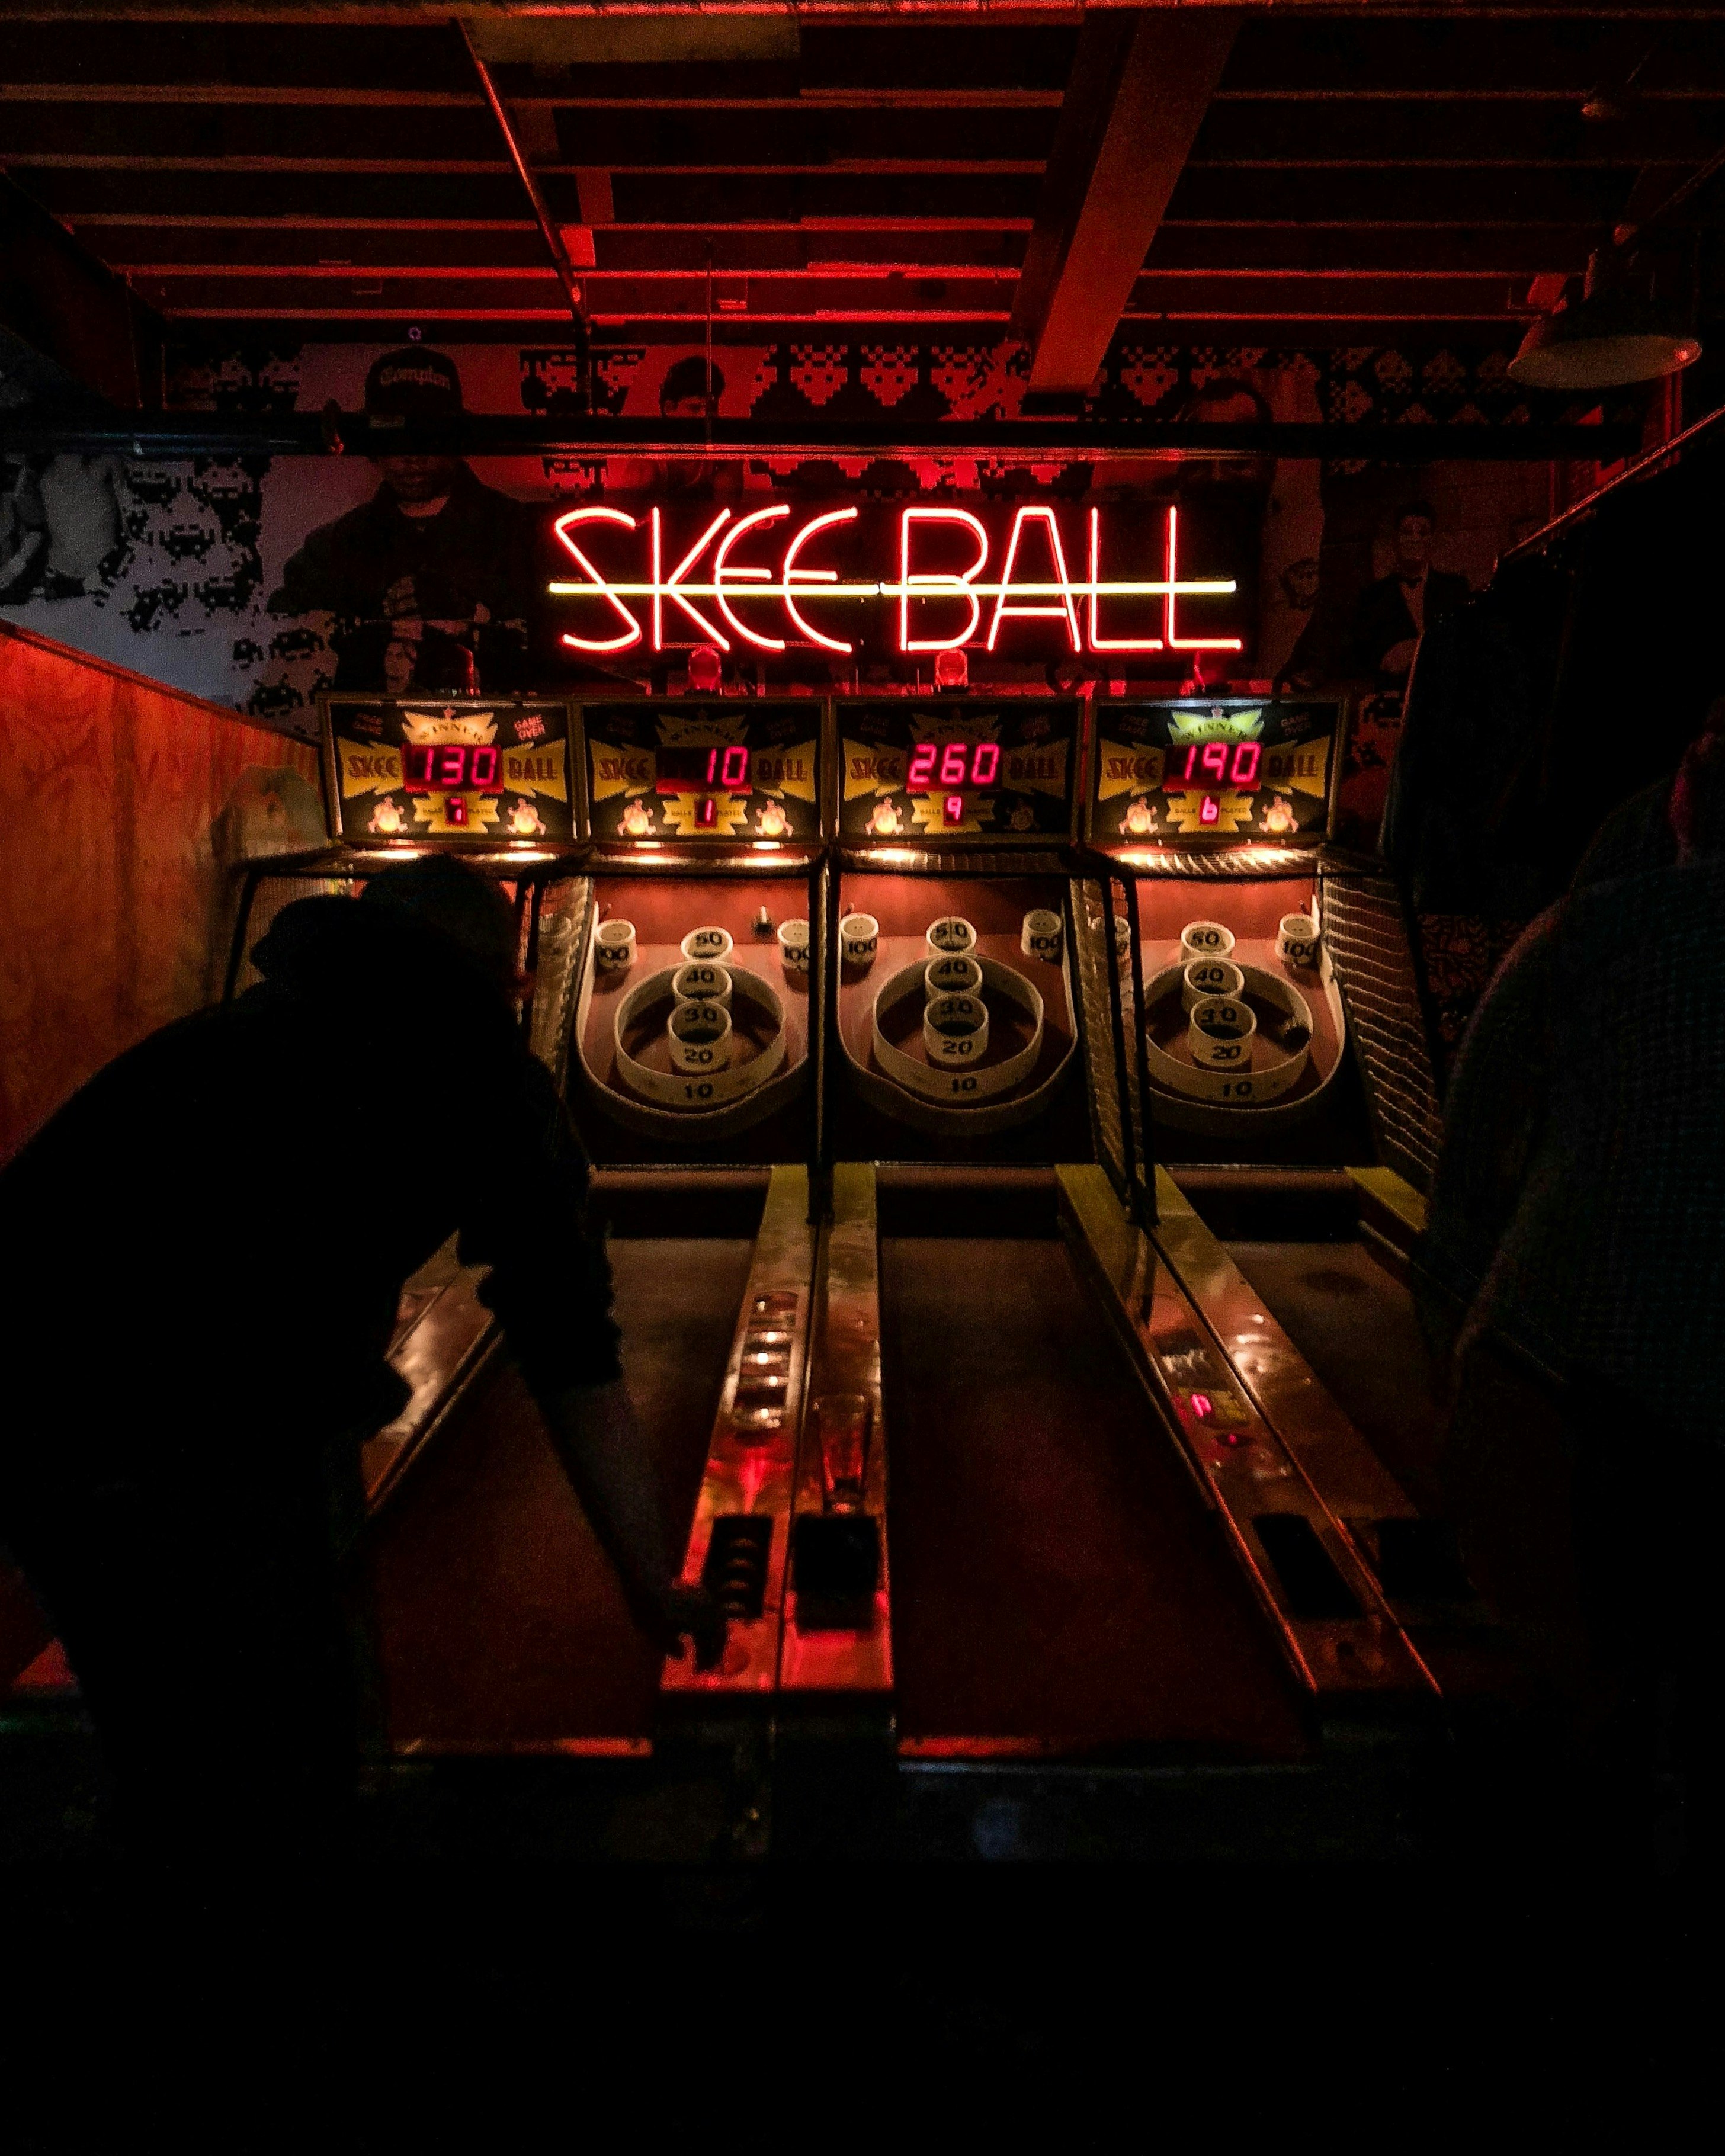 Skeeball arcade machine